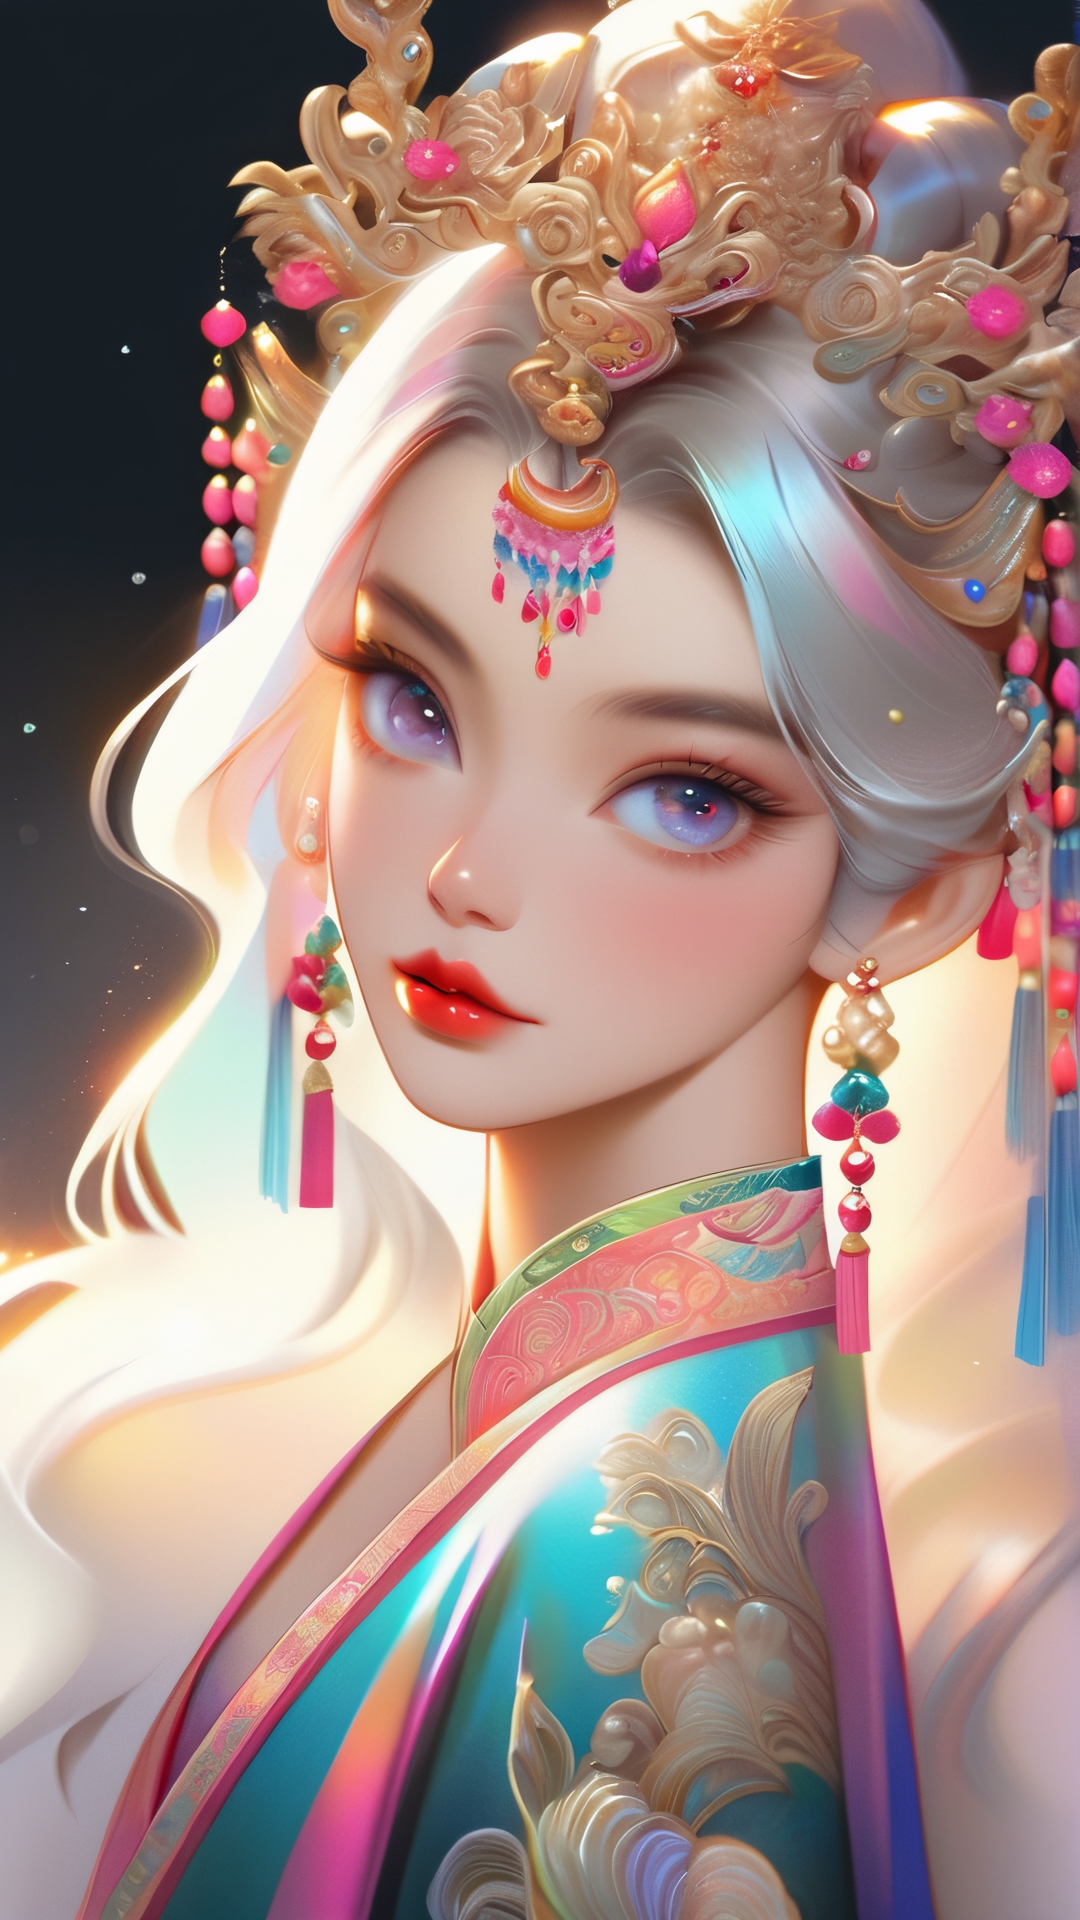 Chinese girl by Rasooli1 on DeviantArt